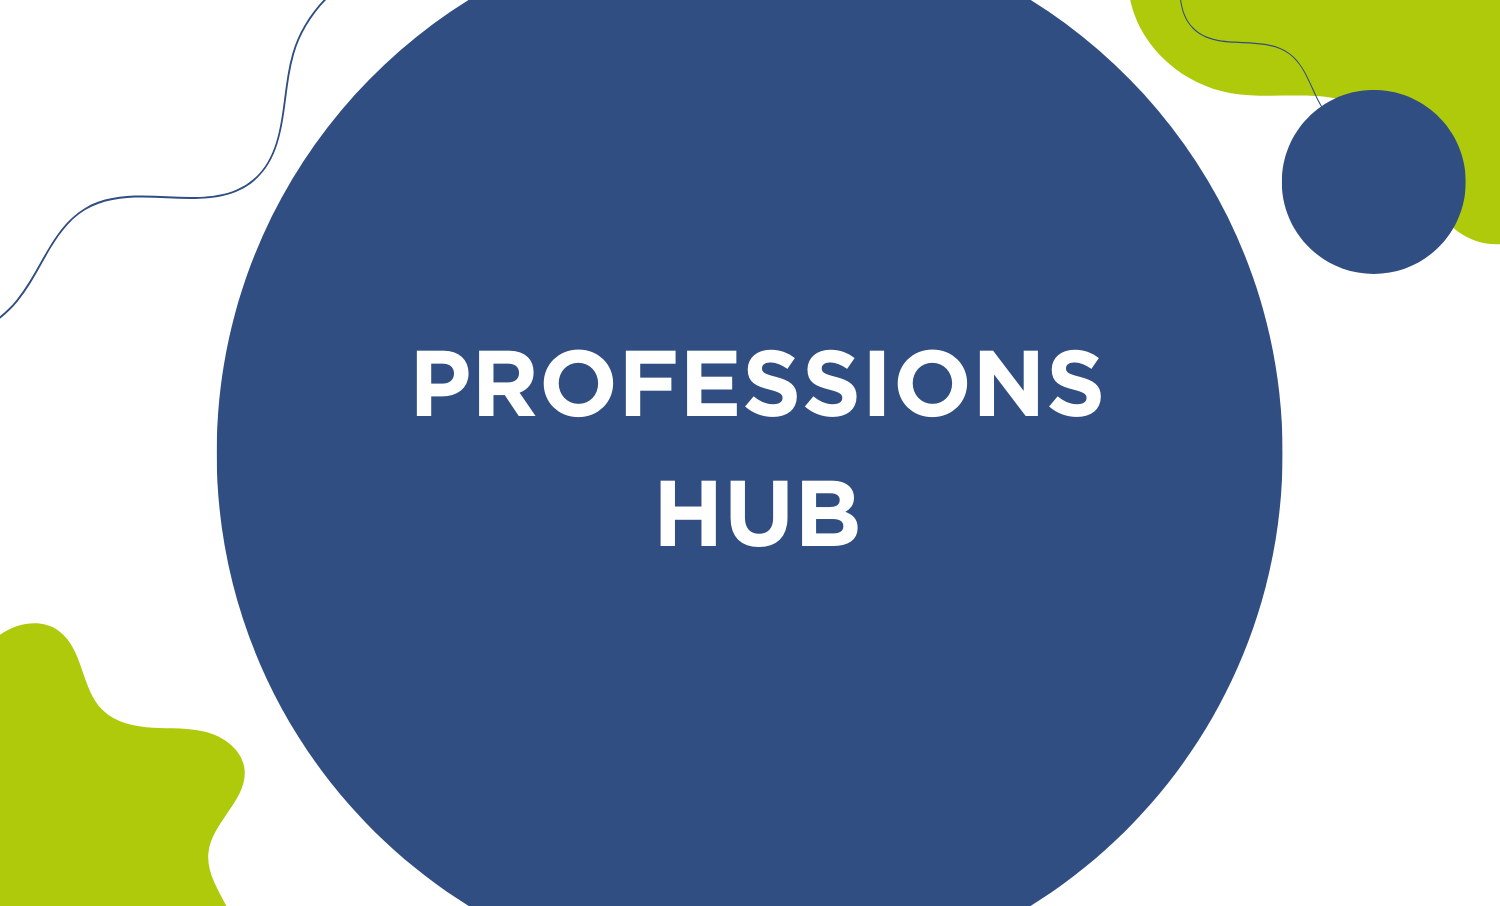 Professions Hub inside blue circle